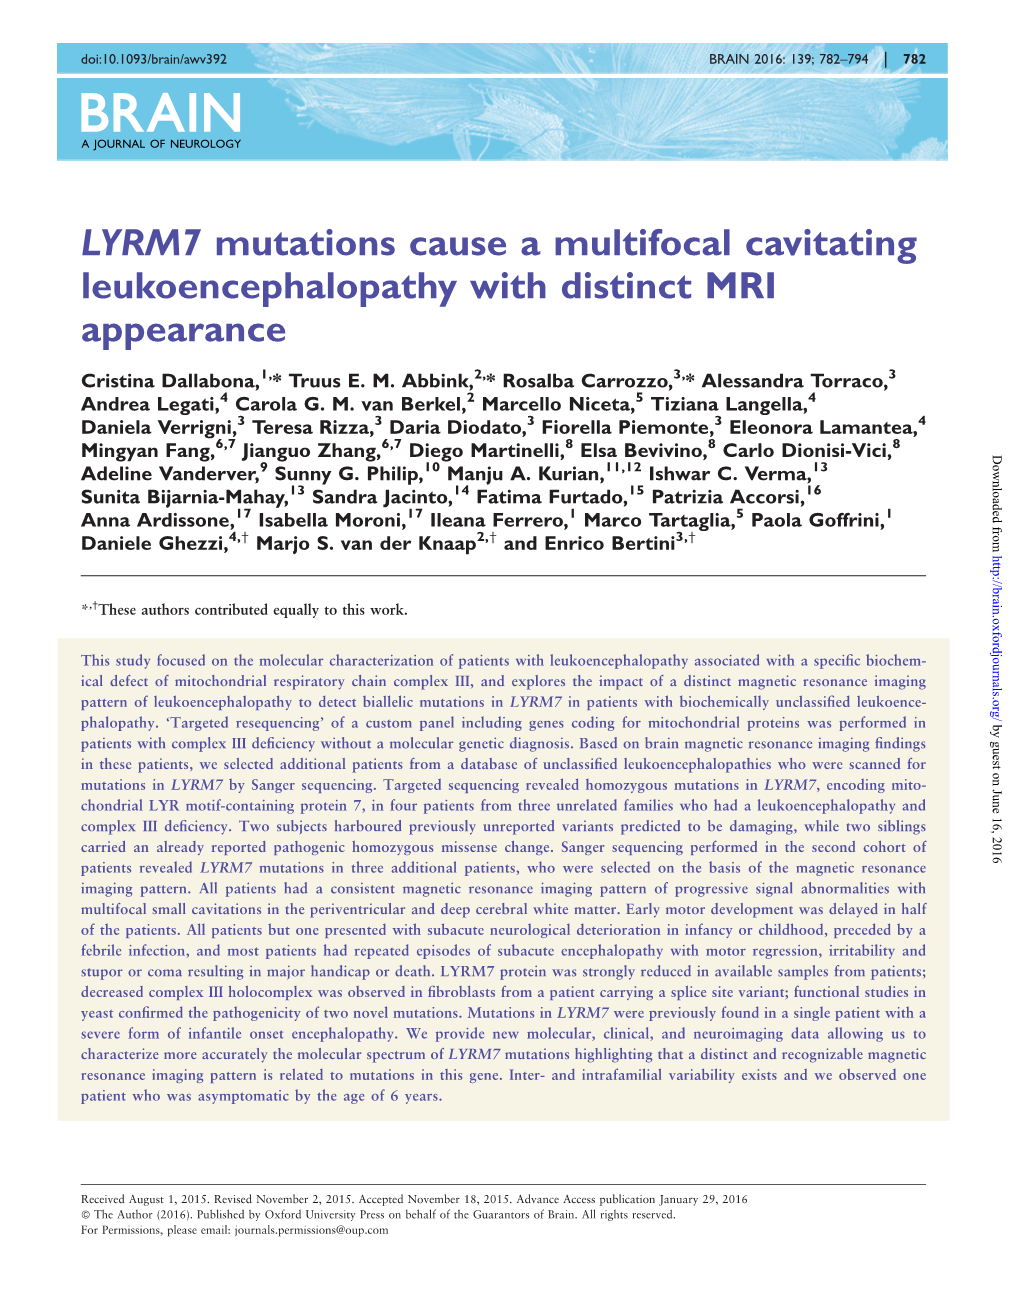 LYRM7 Mutations Cause a Multifocal Cavitating Leukoencephalopathy with Distinct MRI Appearance